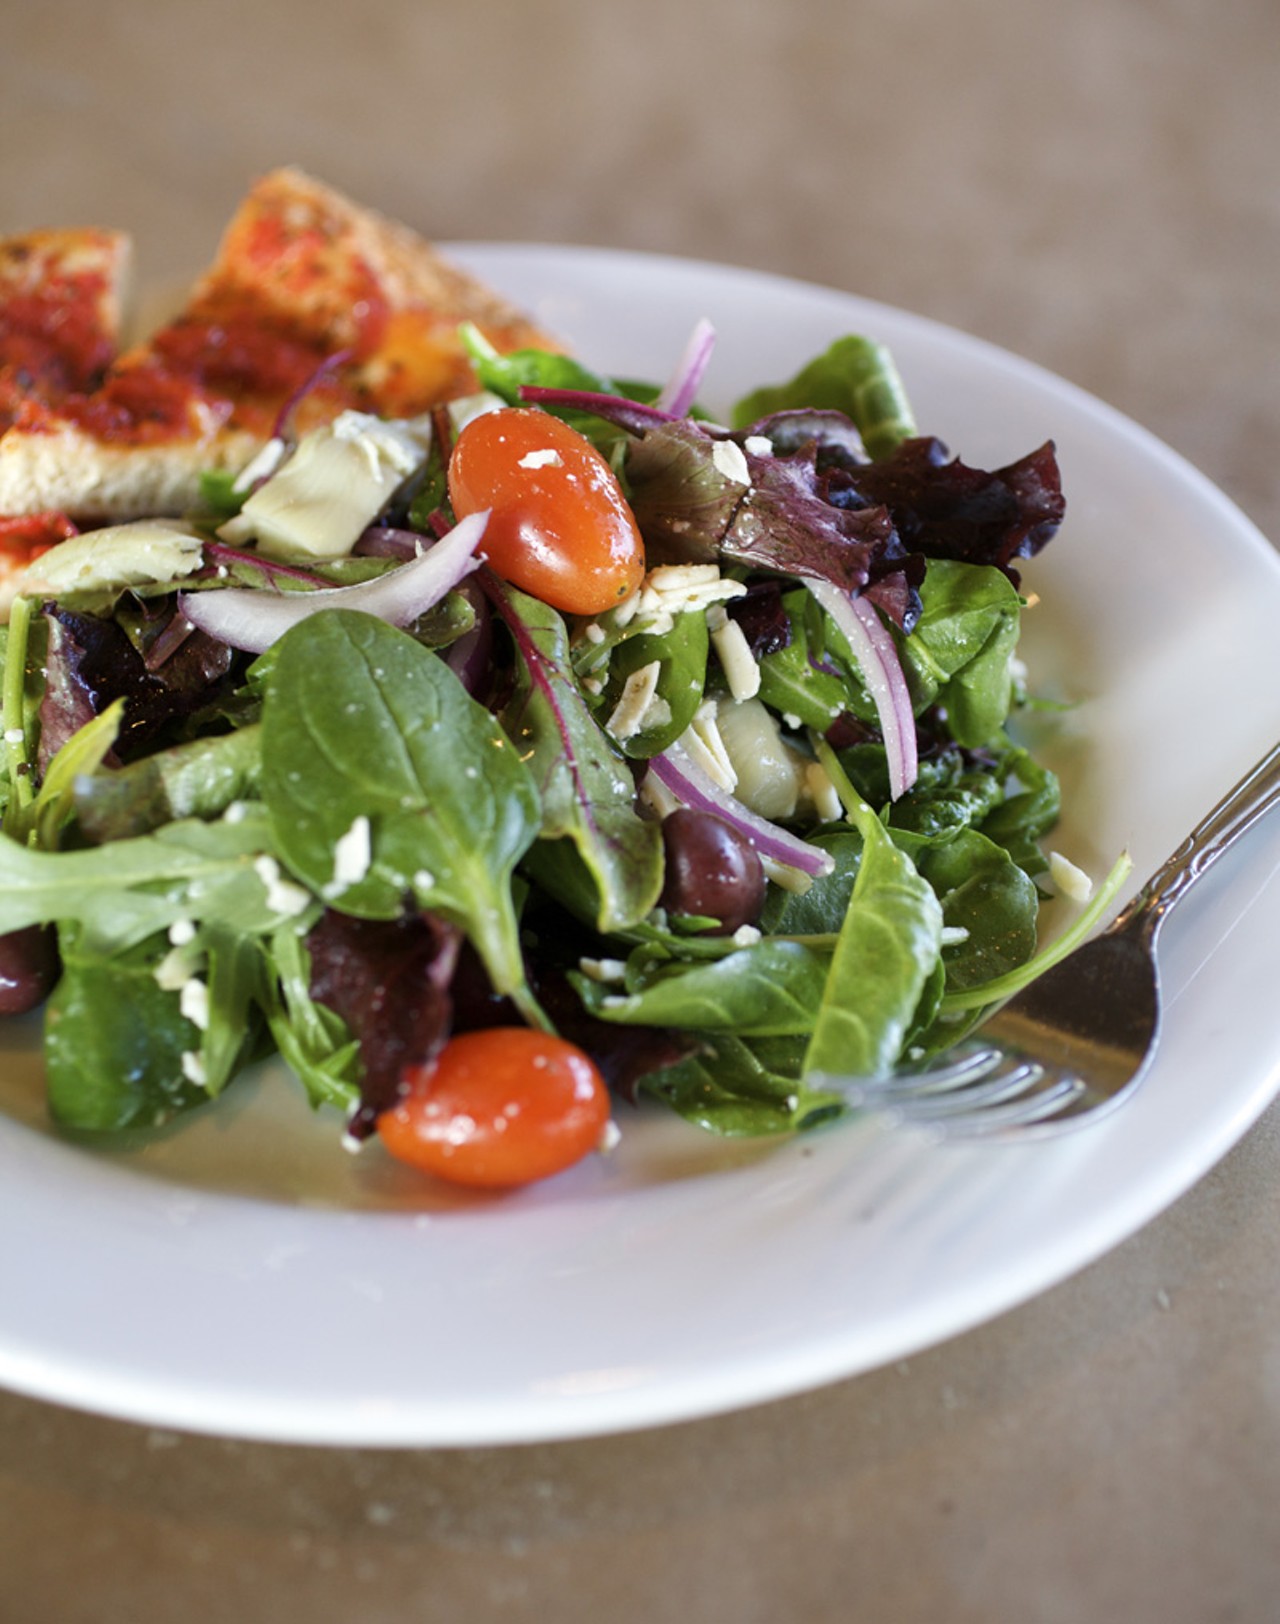 The Tivoli salad is made with mixed greens, red onions, feta cheese kalamata olives, tomatoes and artichokes.